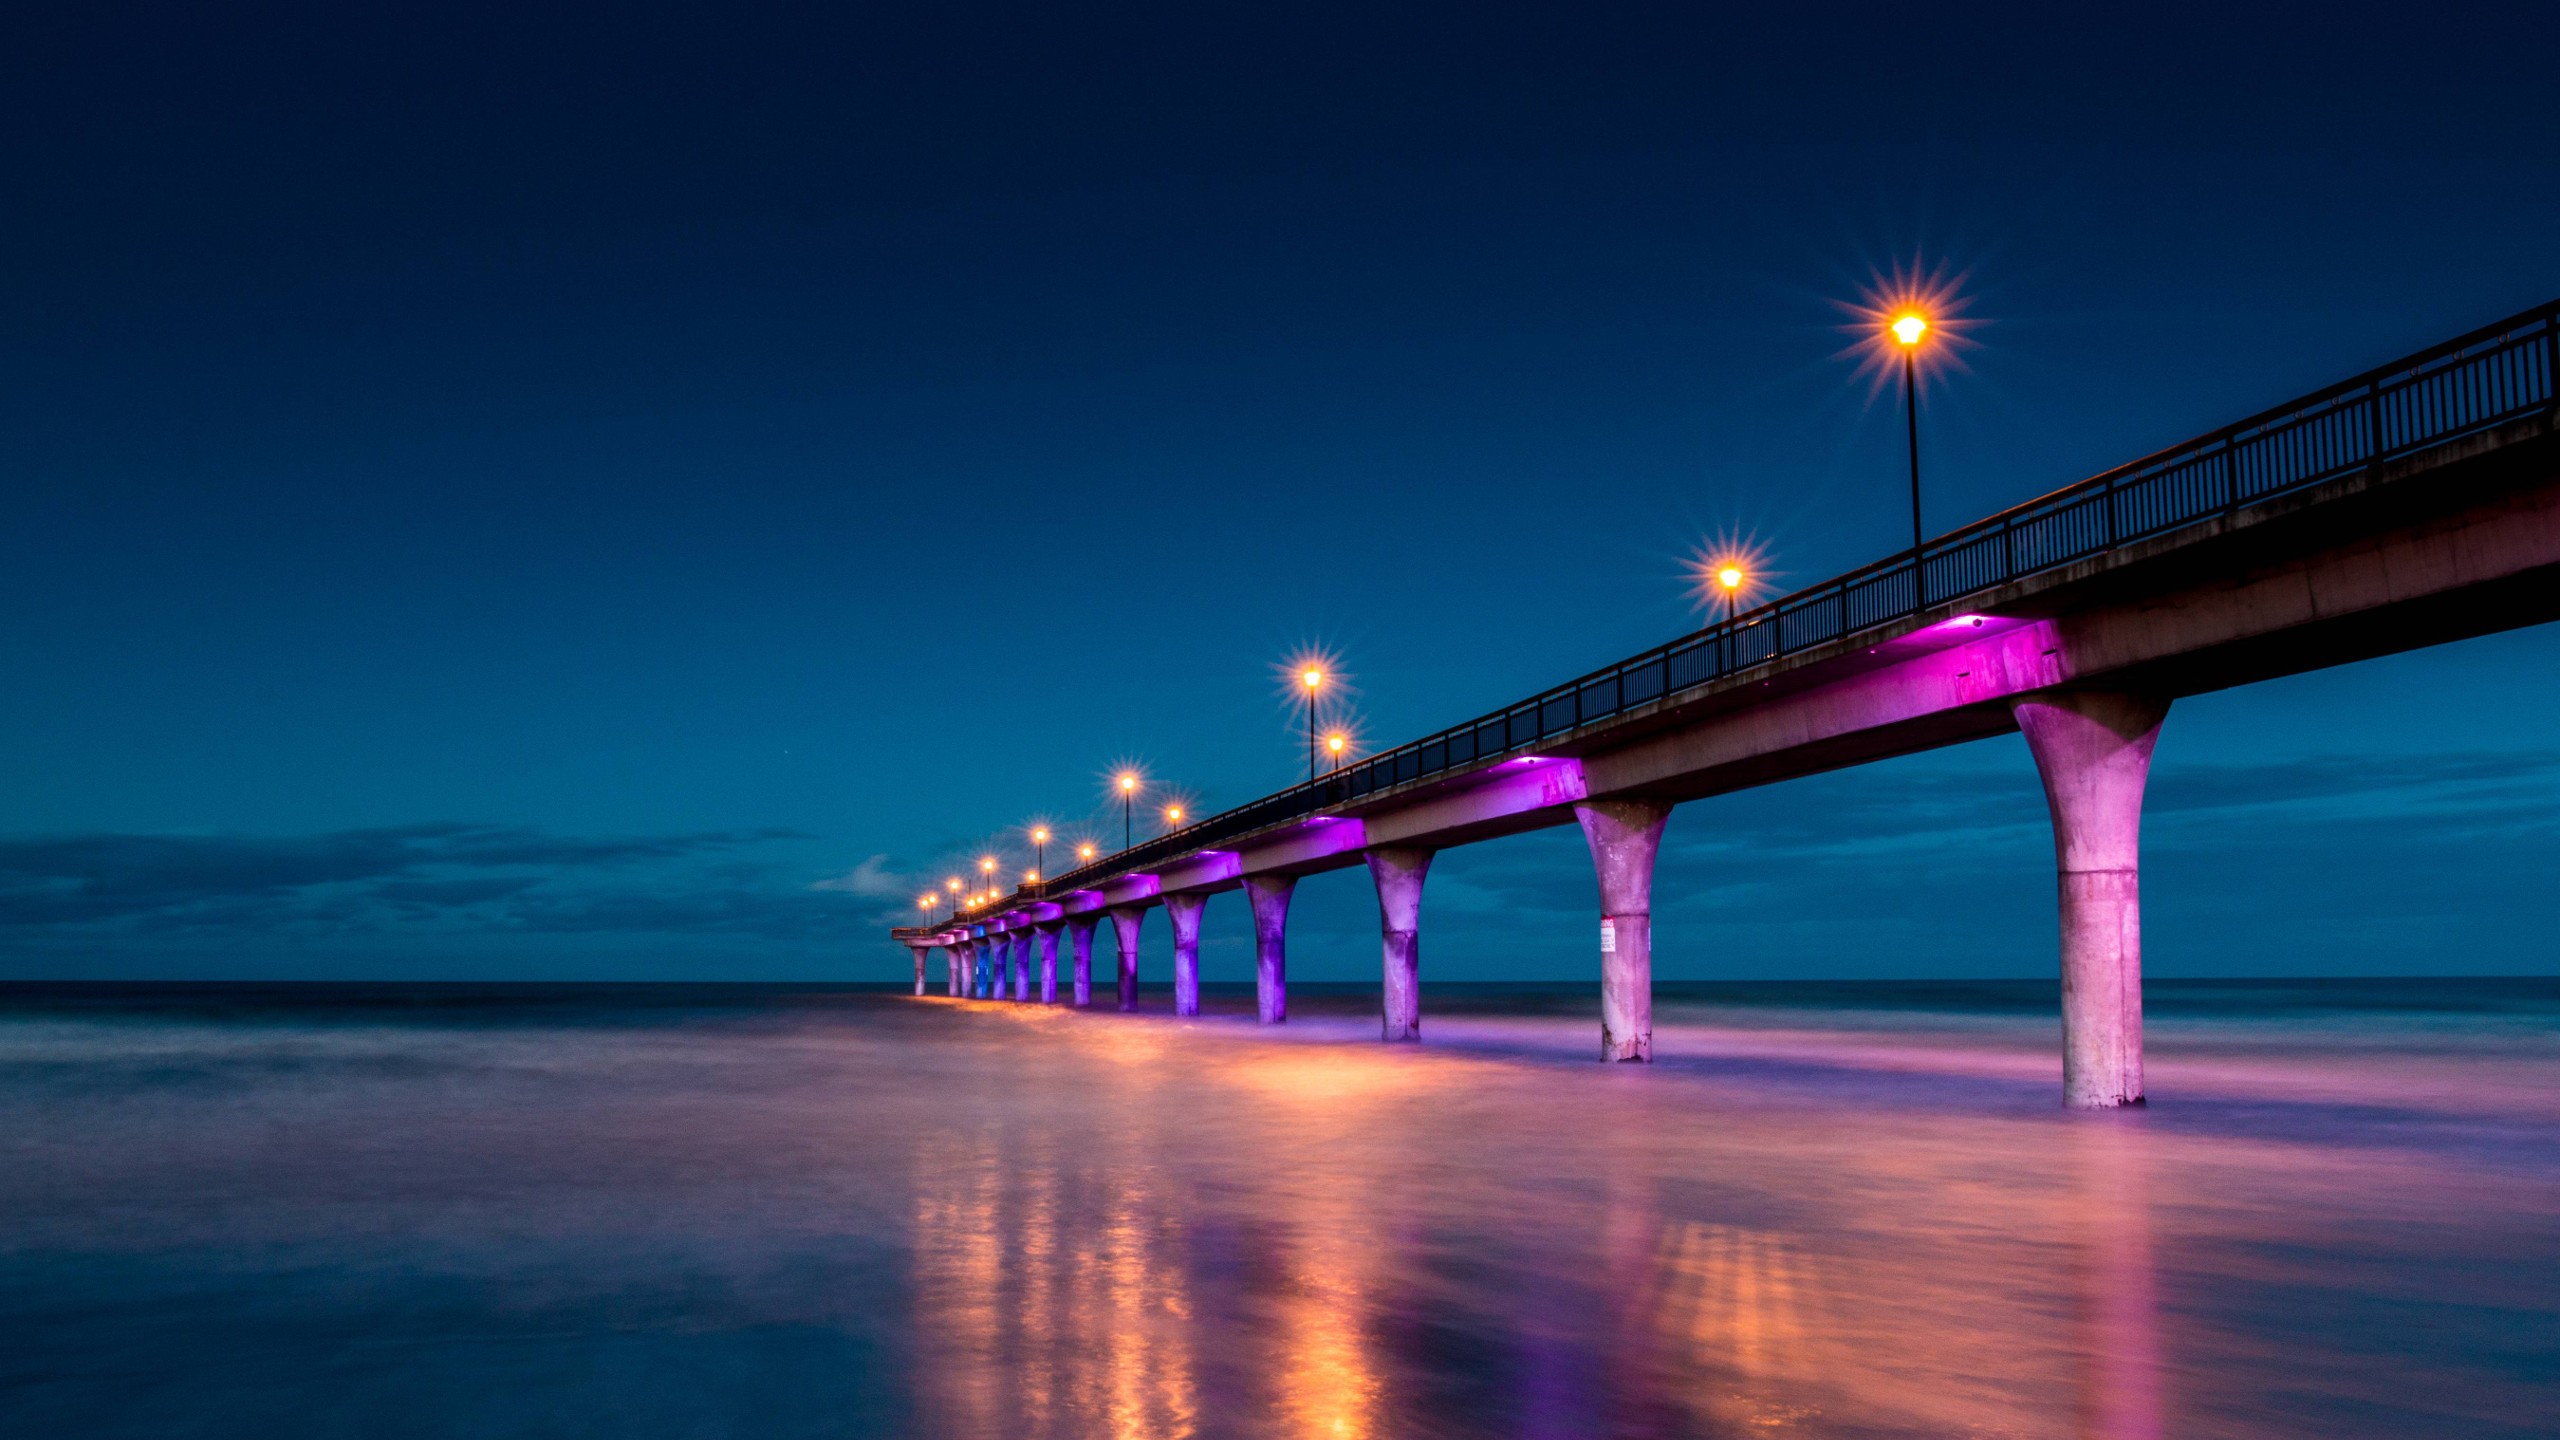 General 2560x1440 New Zealand pier dusk street light sea long exposure blue construction sky low light